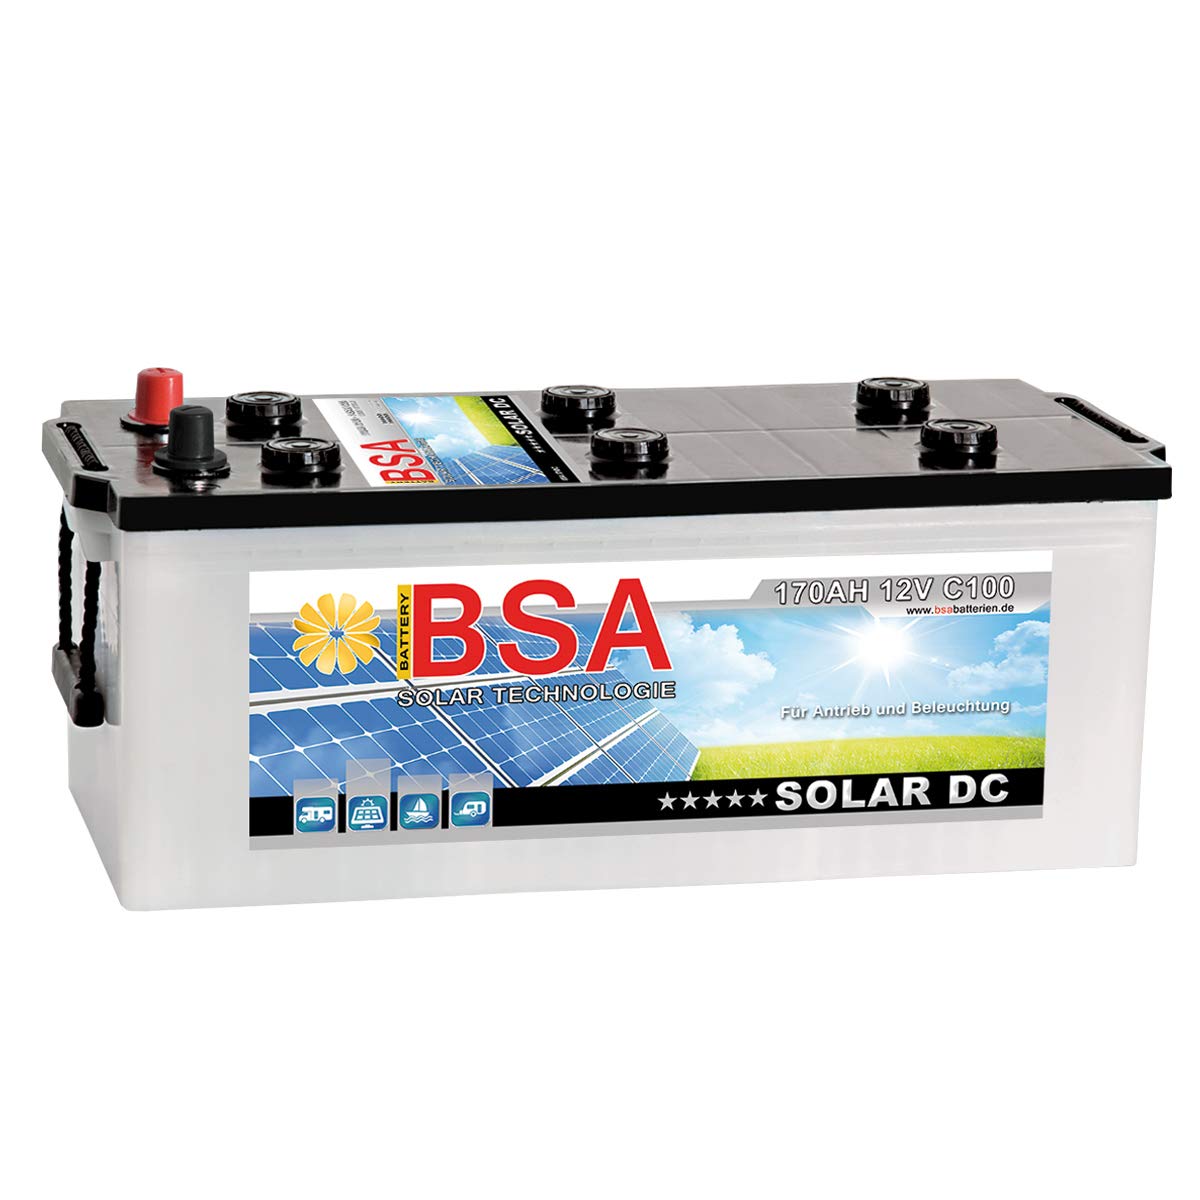 BSA Solar DC 12V 170Ah Batterie Solarbatterie Versorgungsbatterie Boot Wohnmobil - 6 Grössen (170Ah) von BSA SOLAR DC